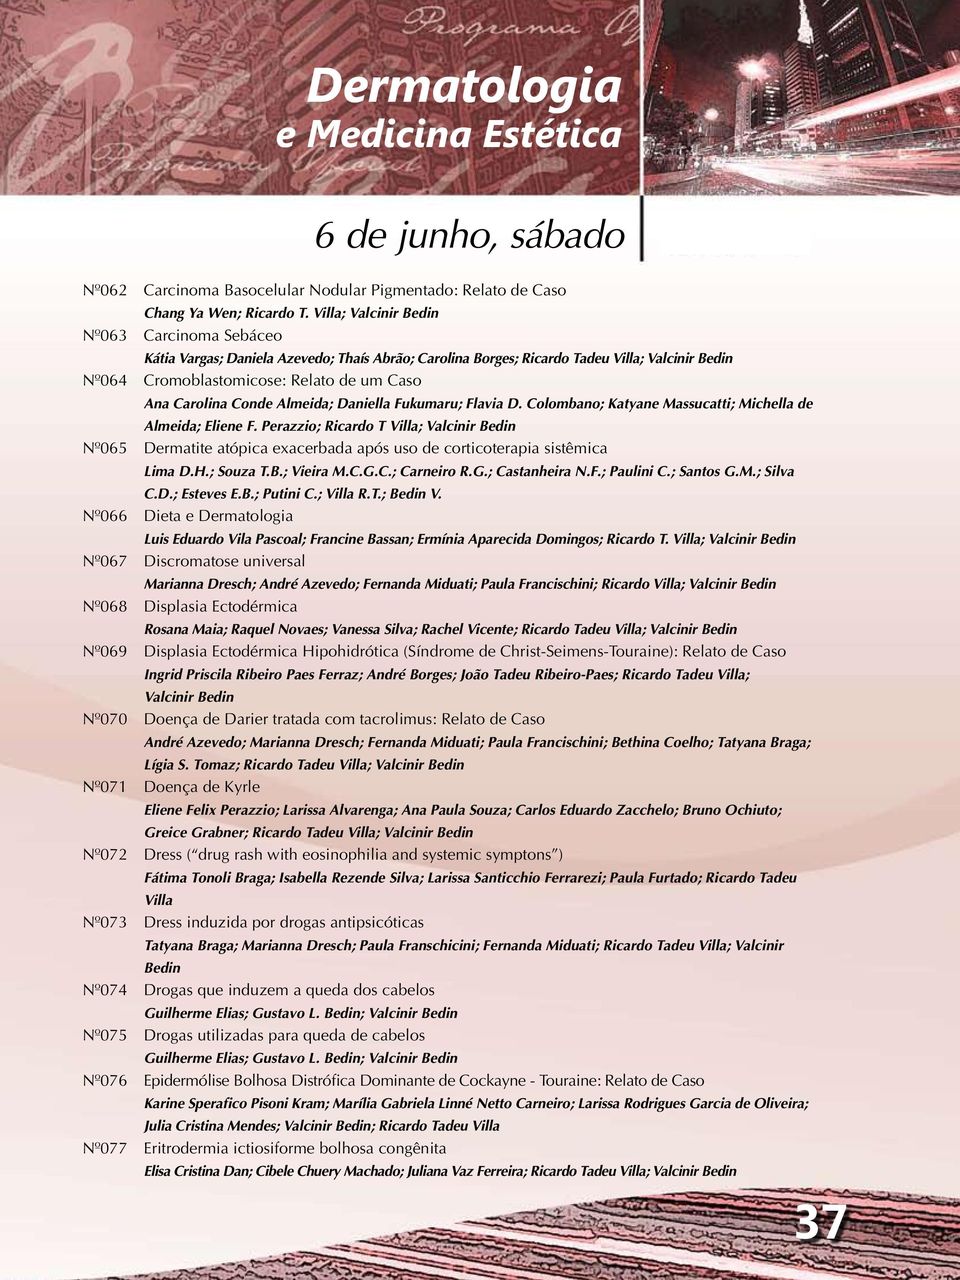 Colombano; Katyane Massucatti; Michella de Almeida; Eliene F. Perazzio; Ricardo T Villa; Nº065 Dermatite atópica exacerbada após uso de corticoterapia sistêmica Lima D.H.; Souza T.B.; Vieira M.C.G.C.; Carneiro R.